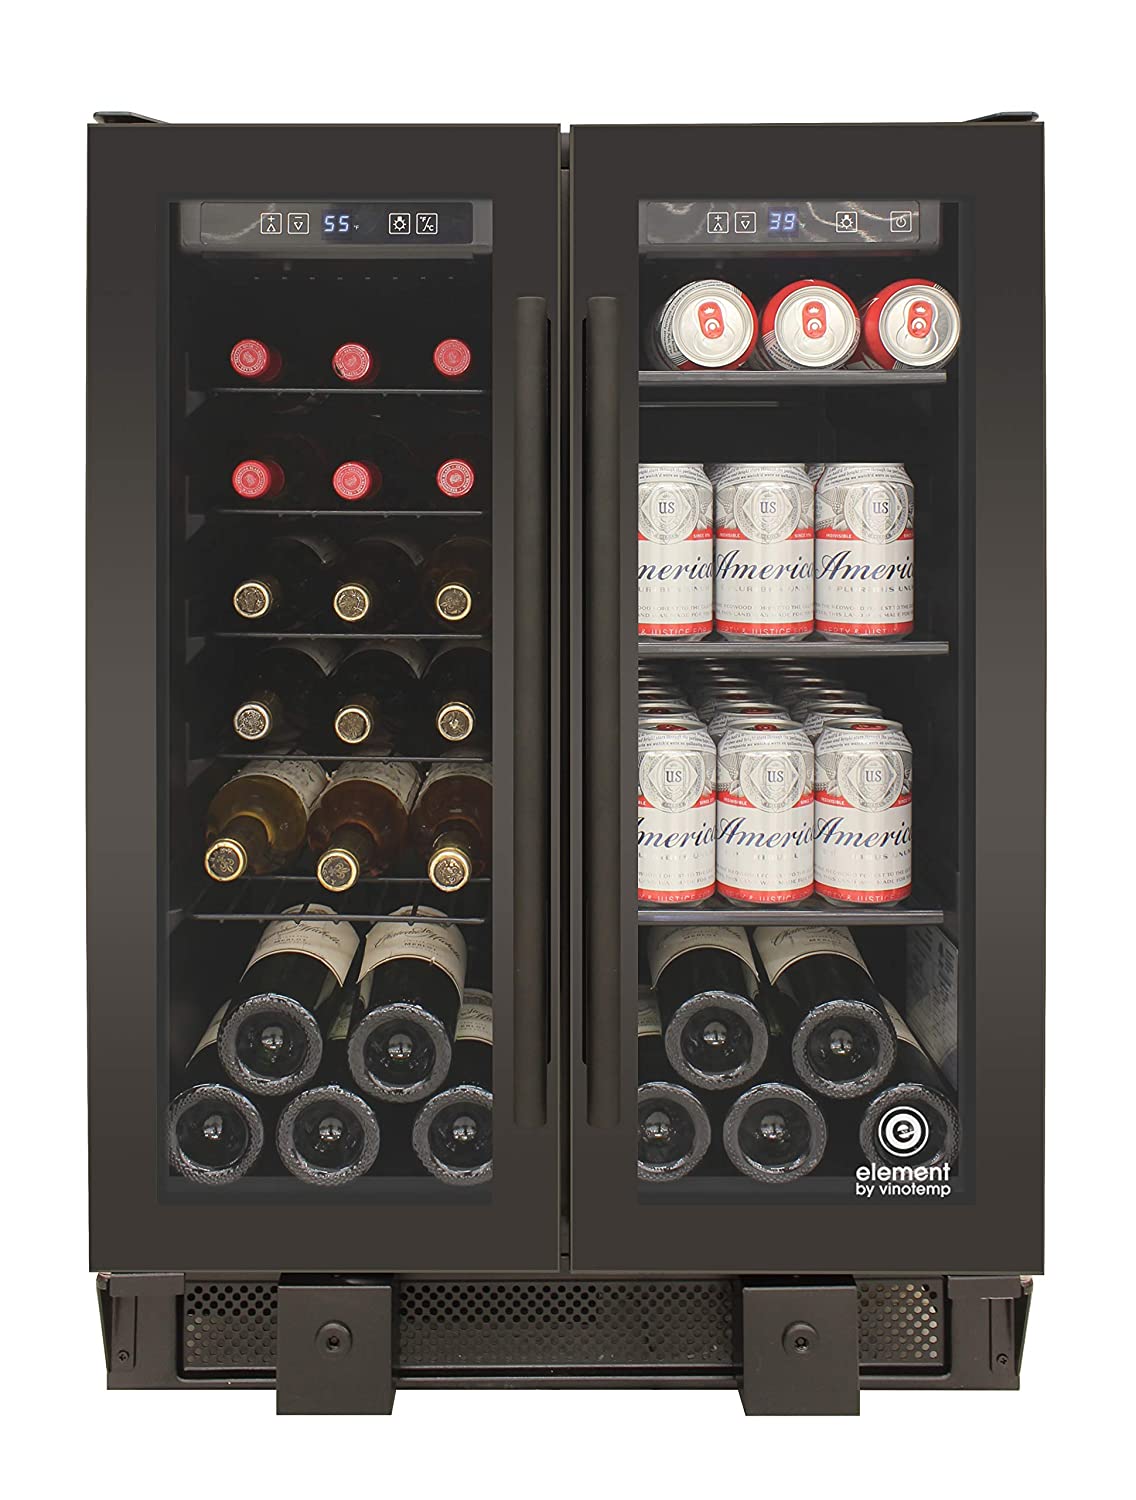 Vinotemp EL-BWC102-02 Touch Screen Wine & Beverage Wine Cooler, Black-$1200